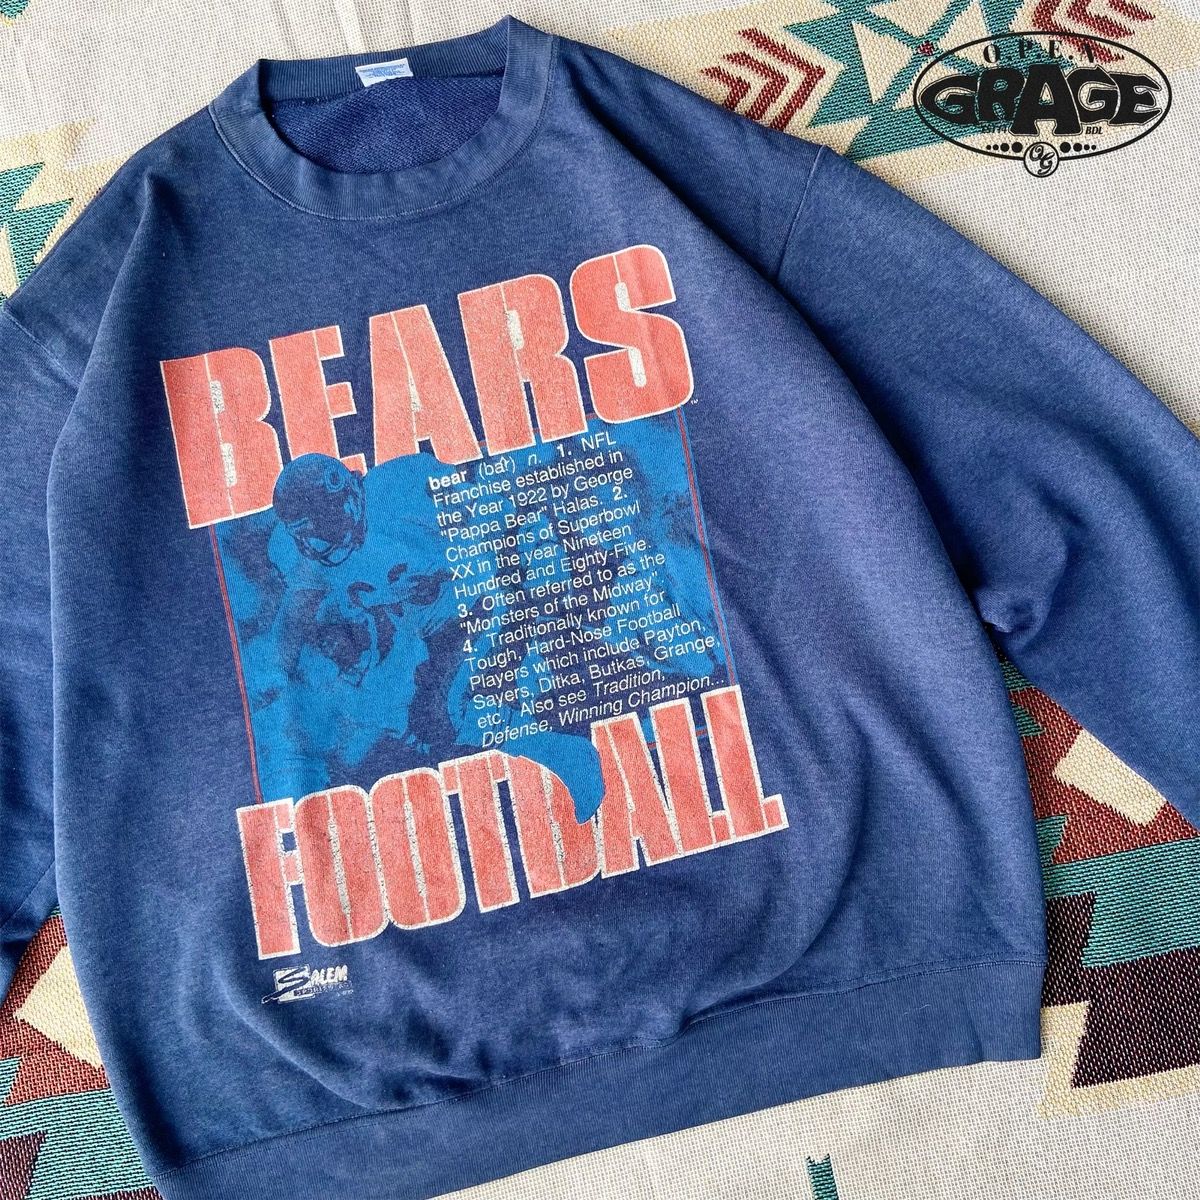 Archival Clothing - Sweatshirt Crewneck CHICAGO BEARS 90s - 9